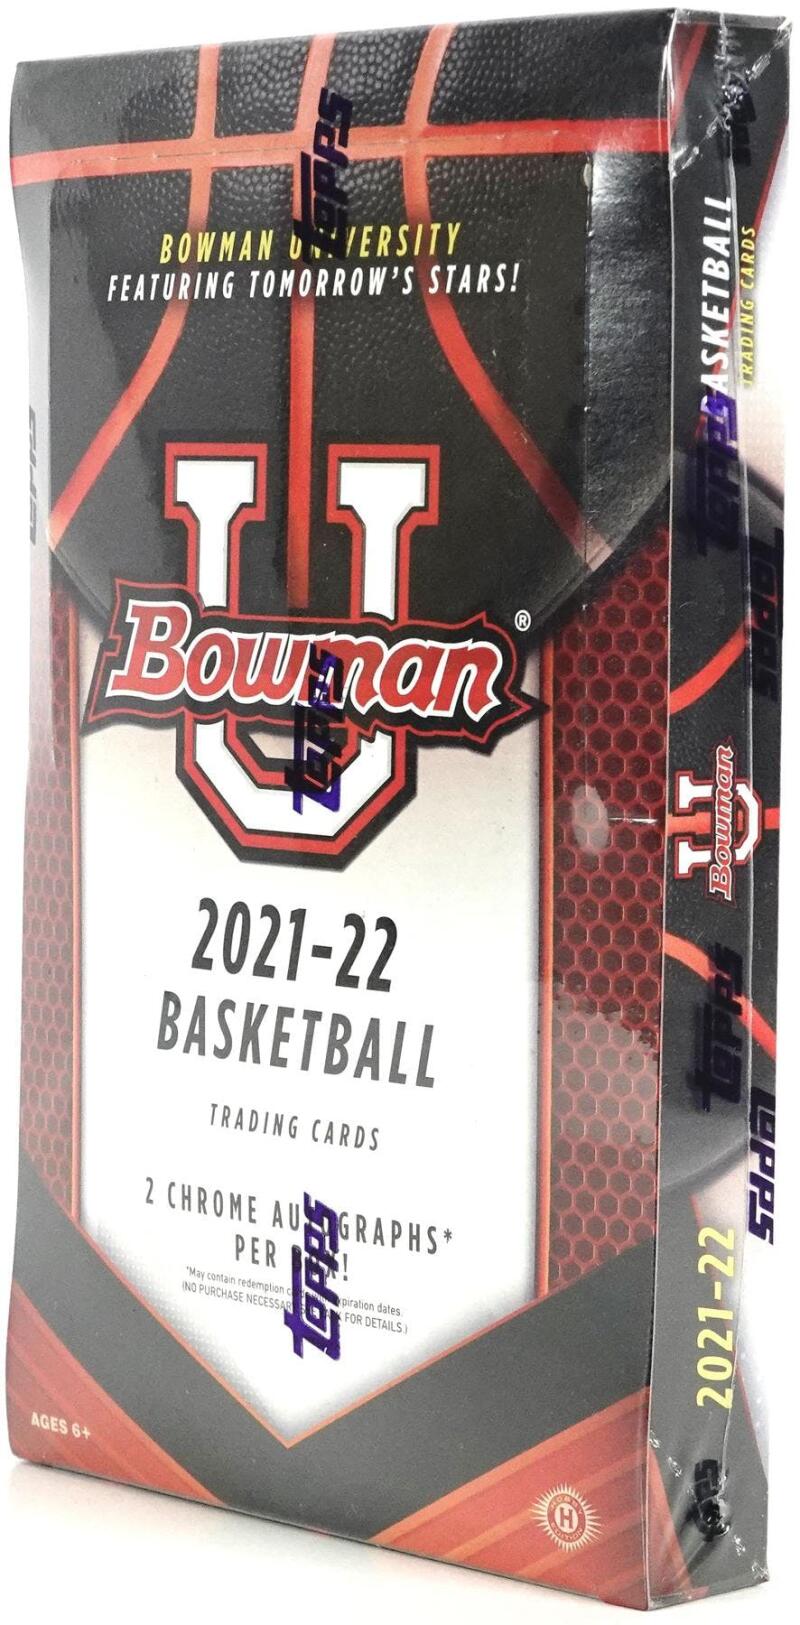 2021-22 Bowman University Basketball Hobby Box Image 2